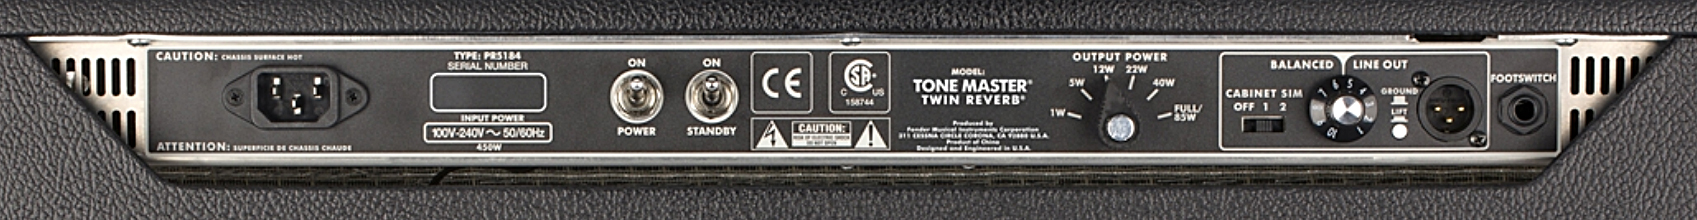 Fender Tone Master Twin Reverb 200w 2x12 - Combo amplificador para guitarra eléctrica - Variation 4